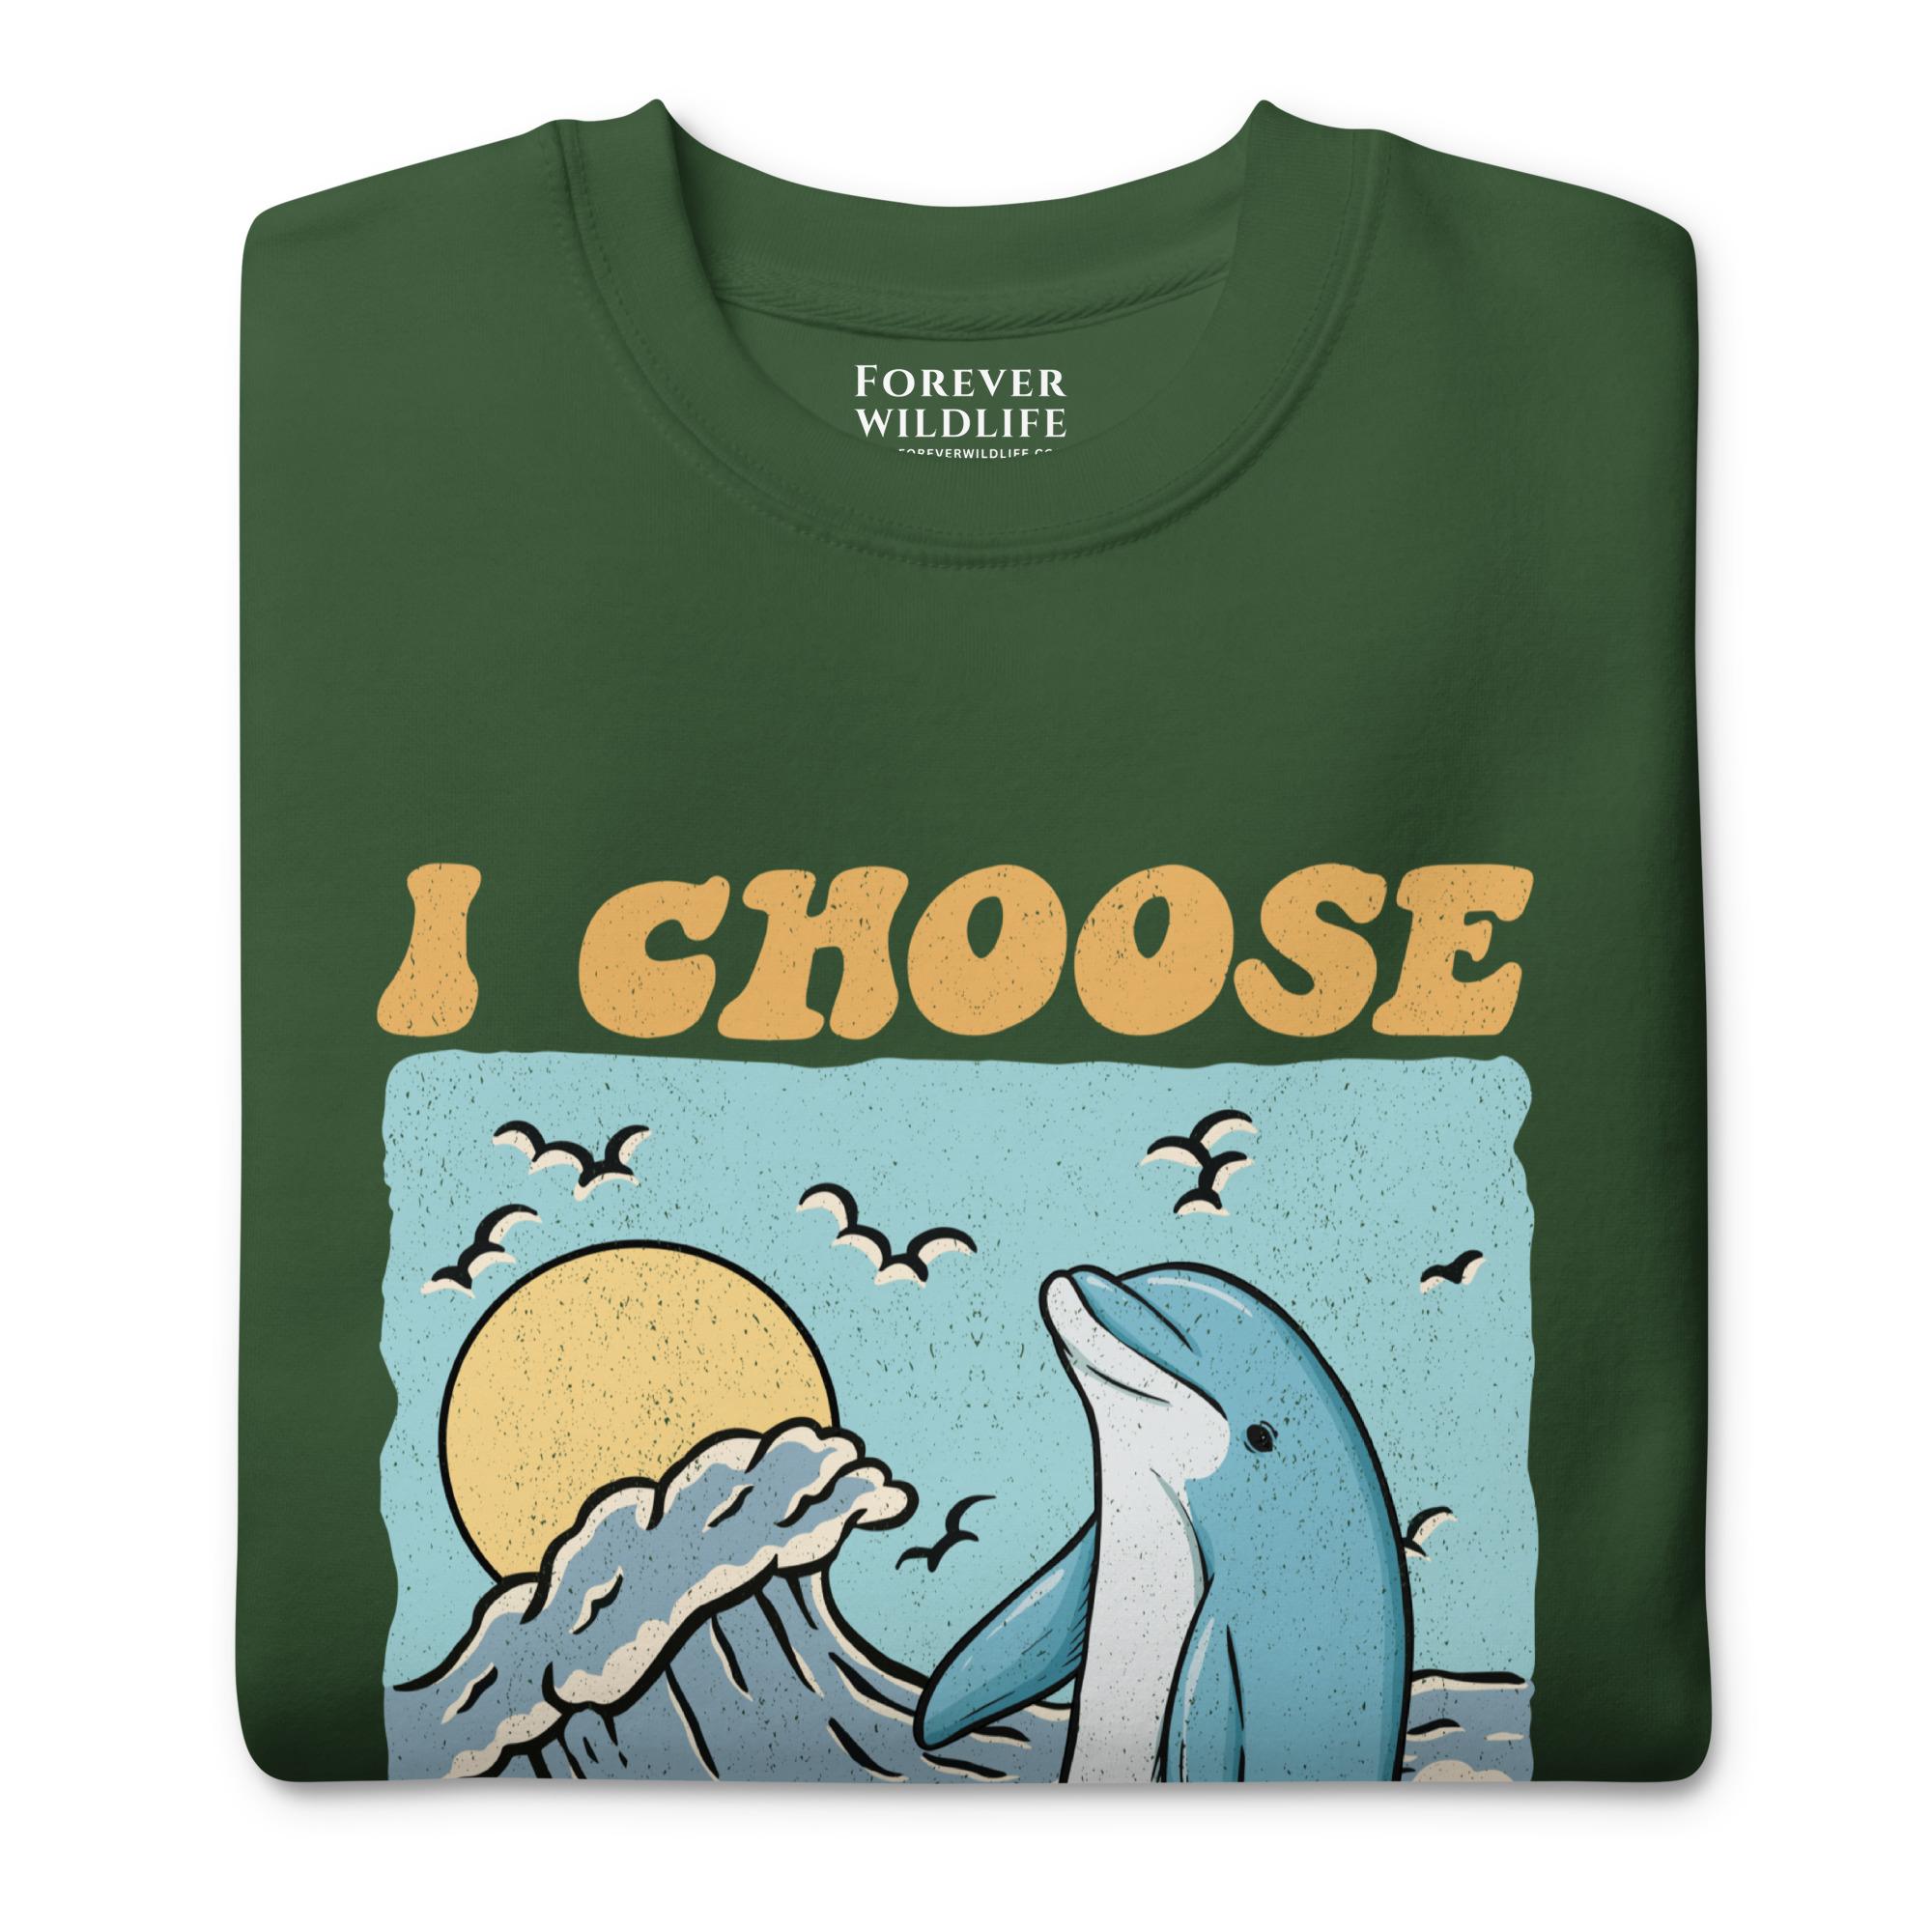 Dolphin Sweatshirt in Green-Premium Wildlife Animal Inspiration Sweatshirt Design with 'I Choose Happiness' text, part of Wildlife Sweatshirts & Clothing from Forever Wildlife.